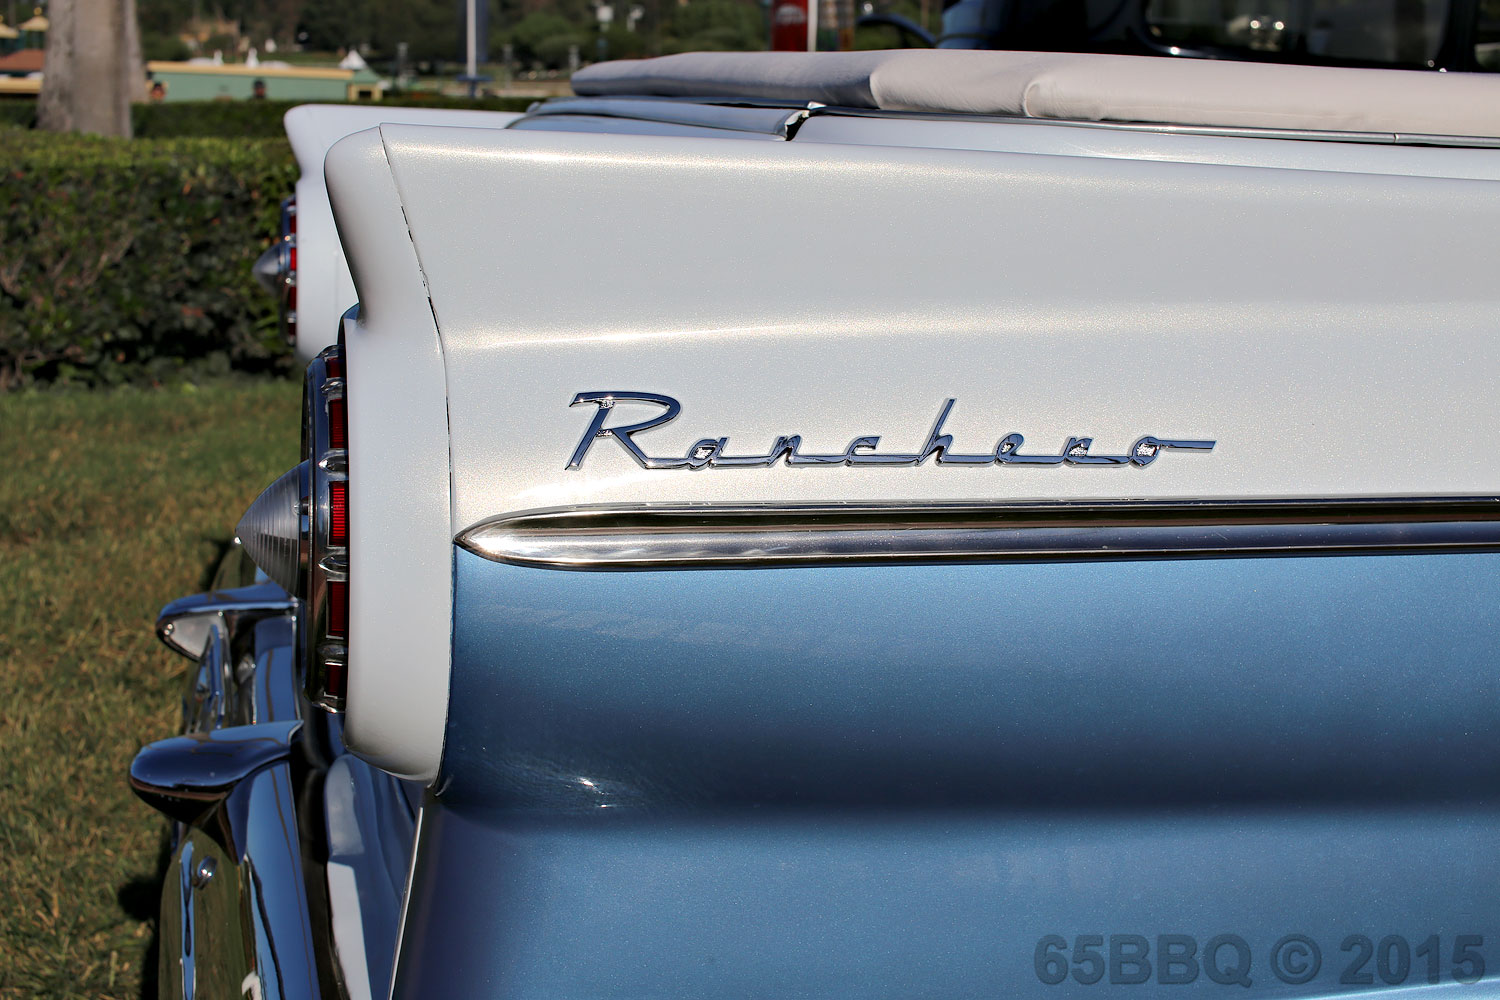 15-RoadKing-65bbq-rancheo-logo.jpg